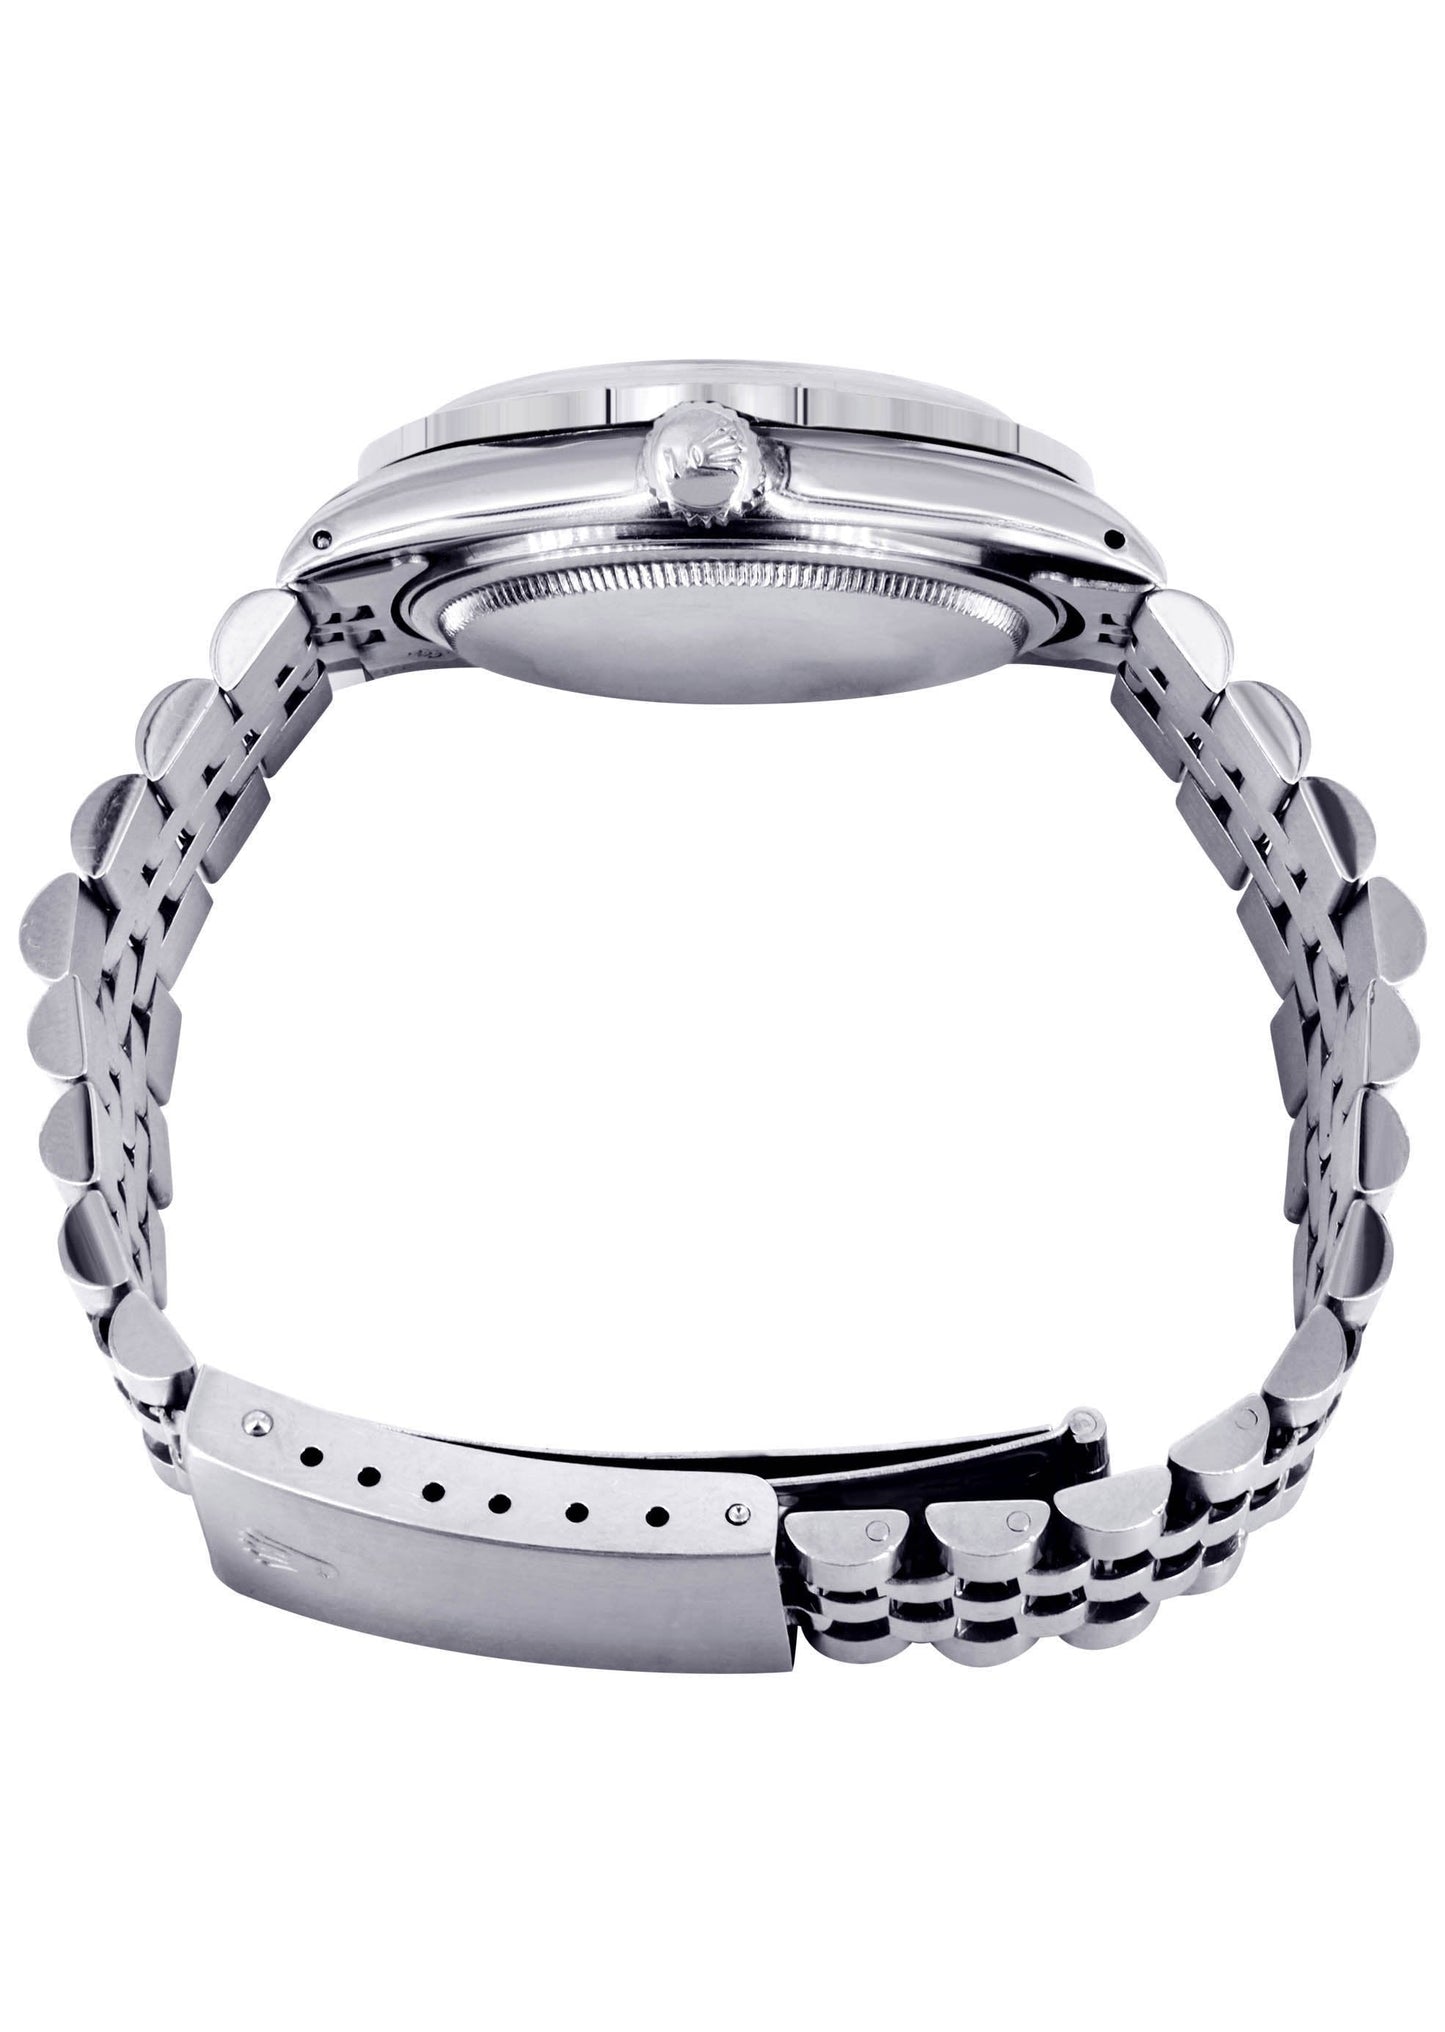 Diamond Gold Rolex Watch For Men 16200 | 36Mm | Rainbow Sapphire Bezel | Black Arabic Numeral Dial | Jubilee Band